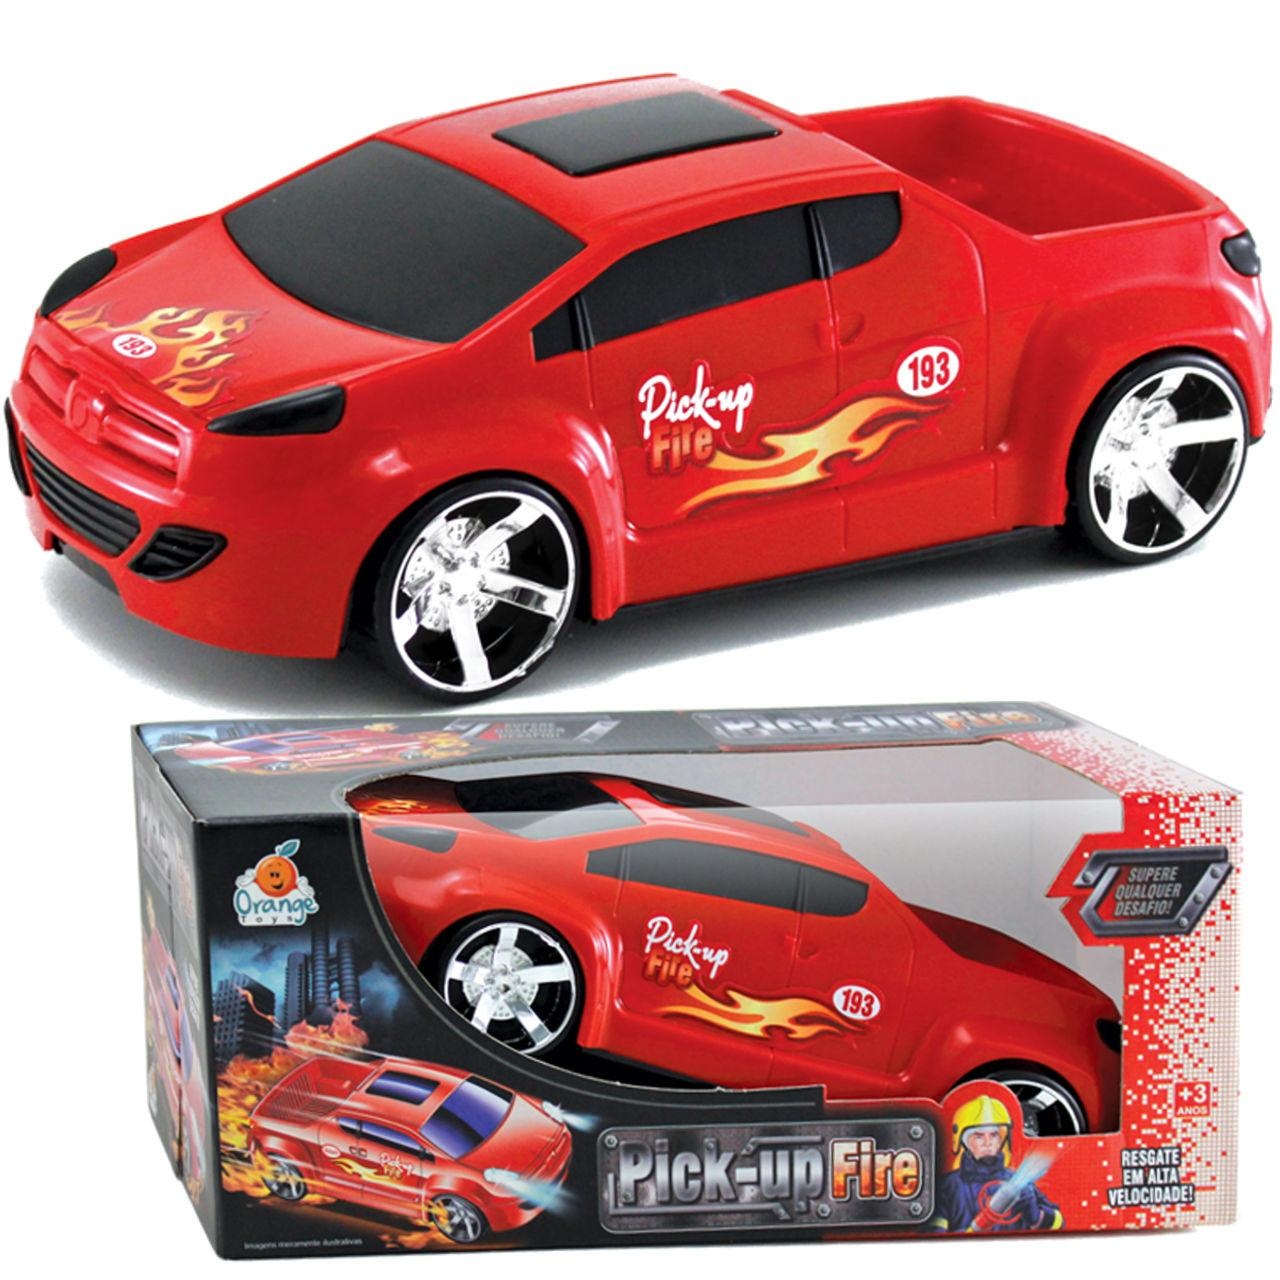 Pickup Fire - Orange Toys